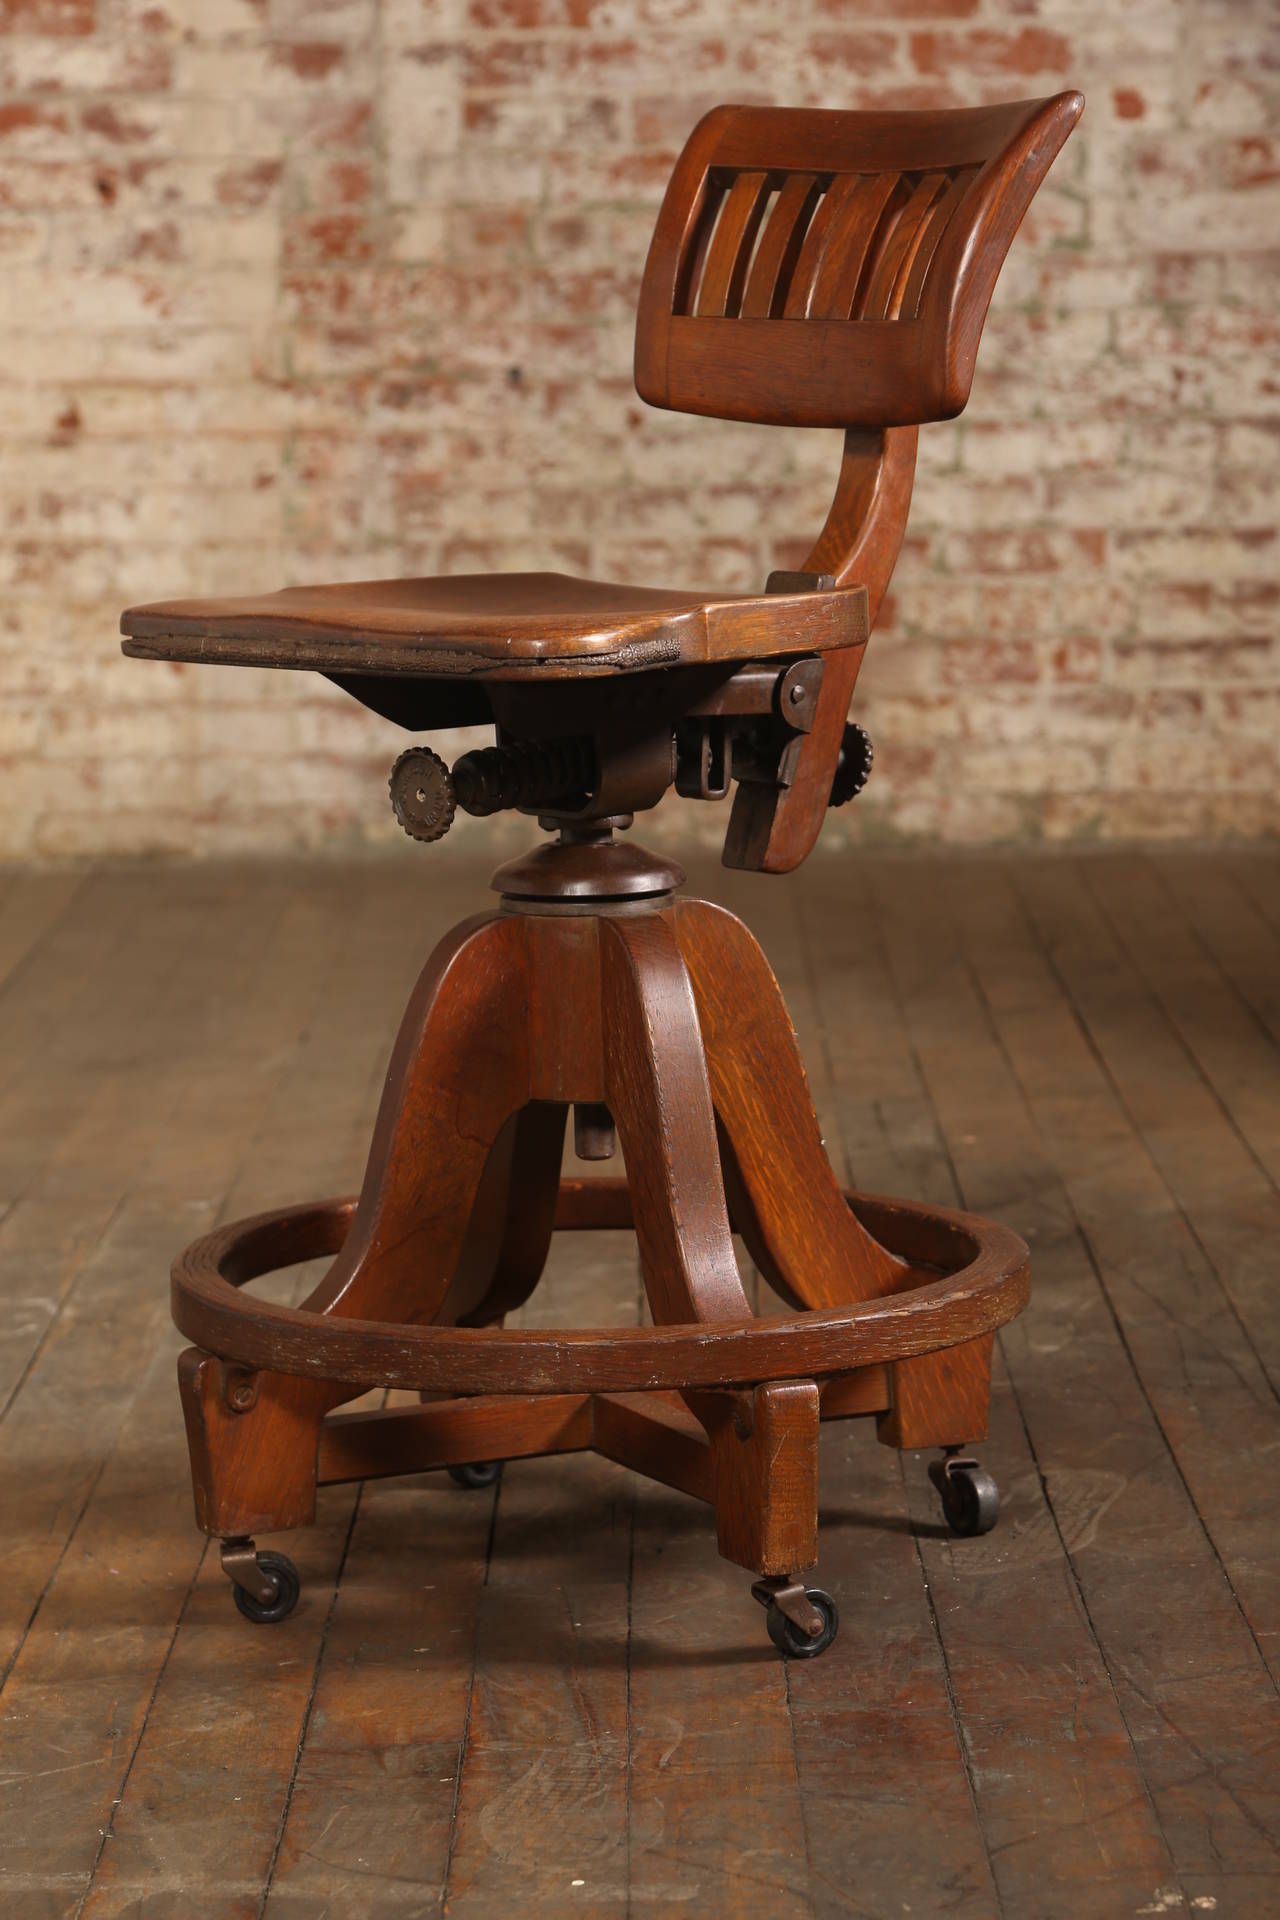 Vintage Industrial Furniture. Vintage Industrial Adjustable Drafting Stool. Stool measures 20 1/2